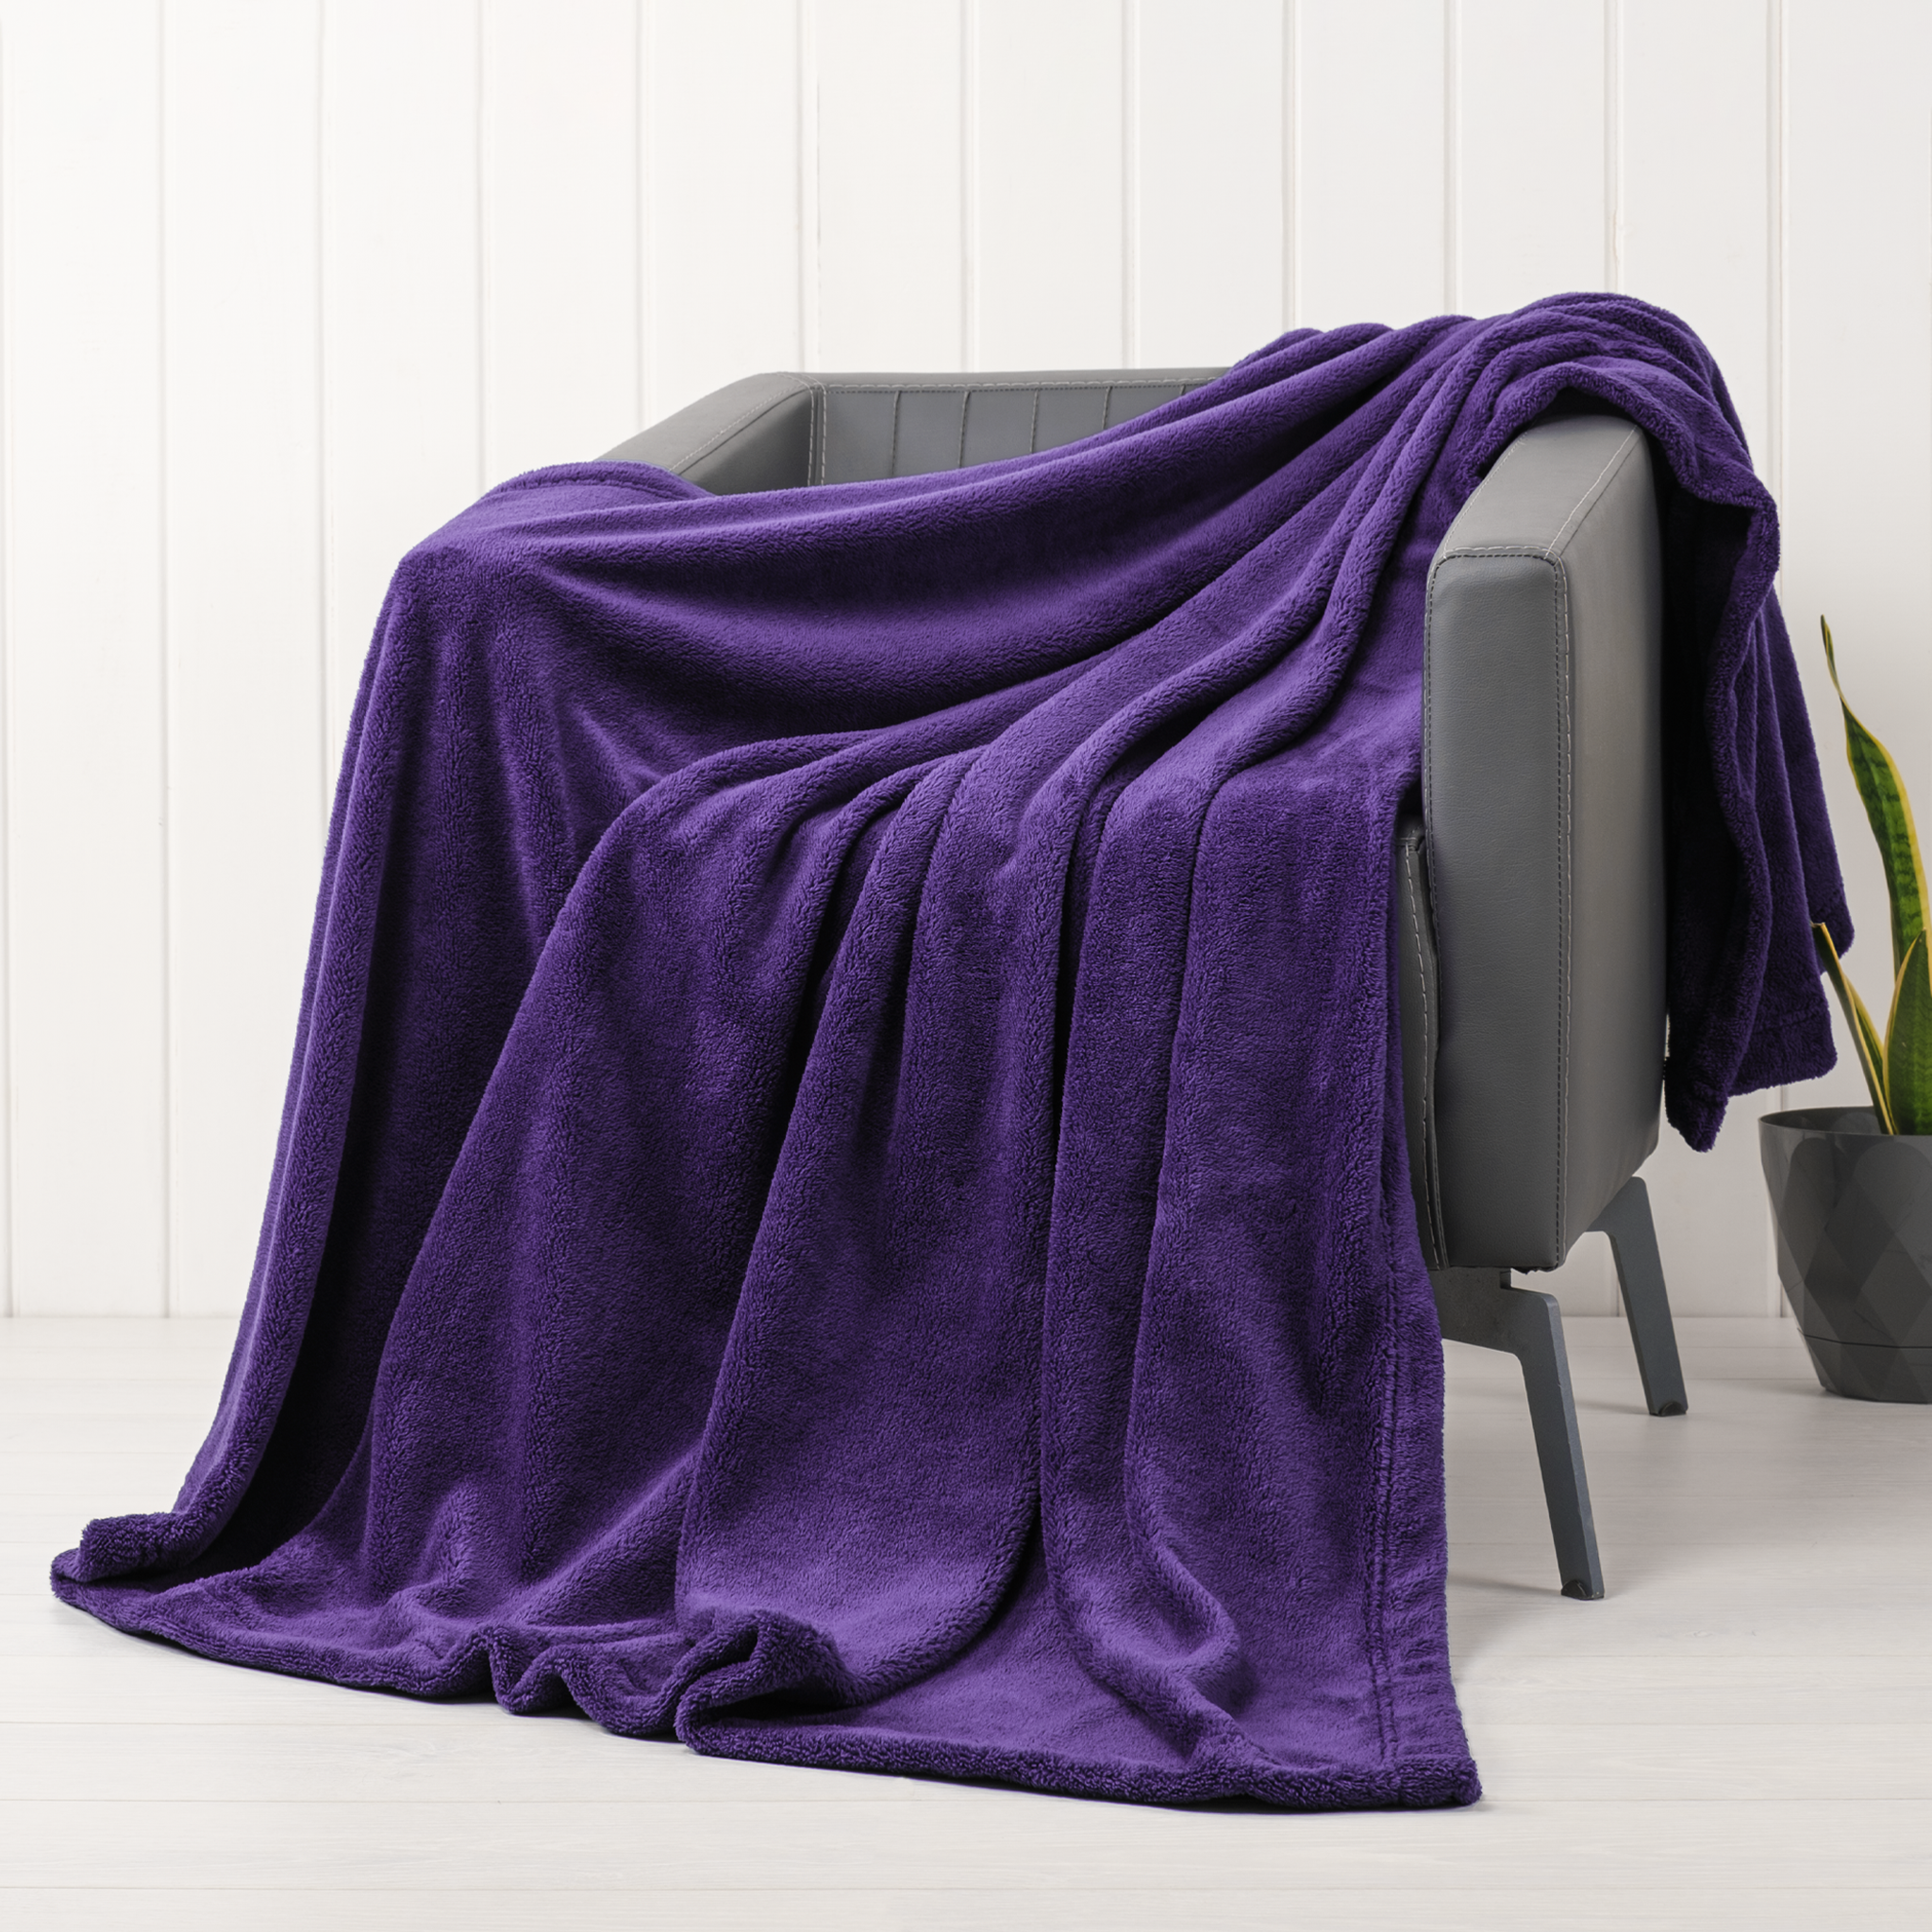 American Soft Linen - Bedding Fleece Blanket - Twin Size 60x80 inches - Purple - 1